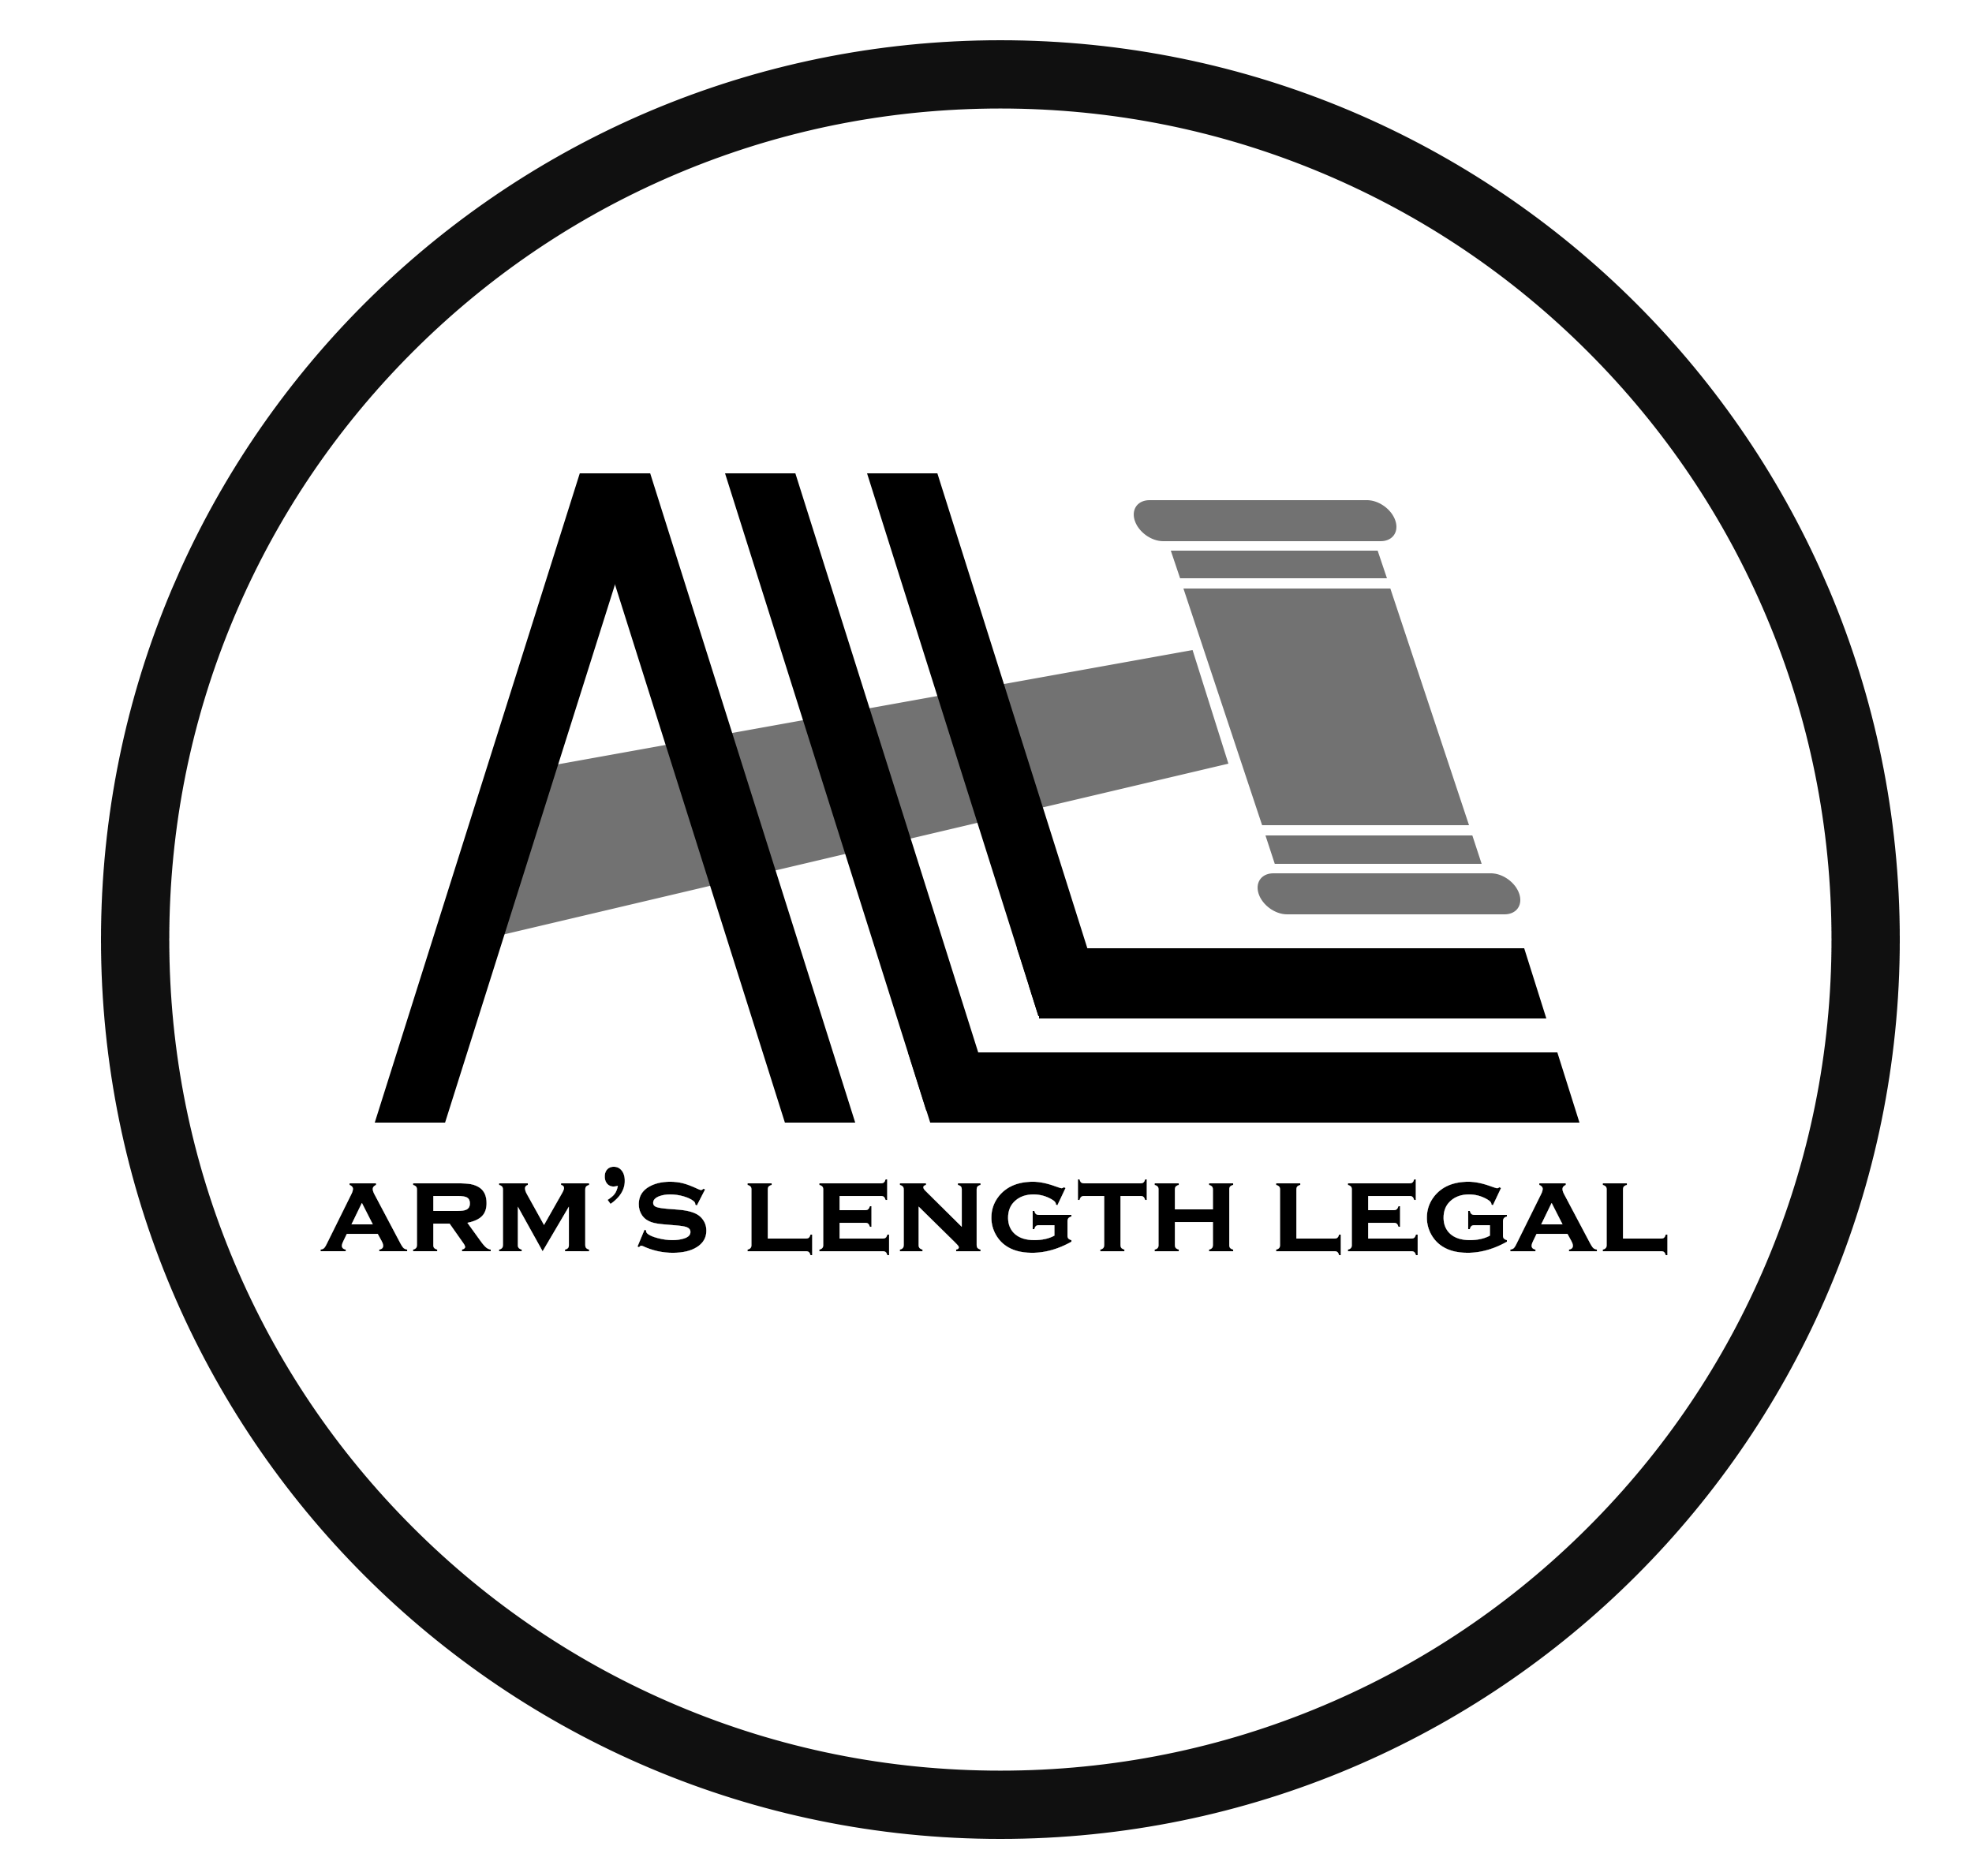 ARMS LENGTH LEGAL